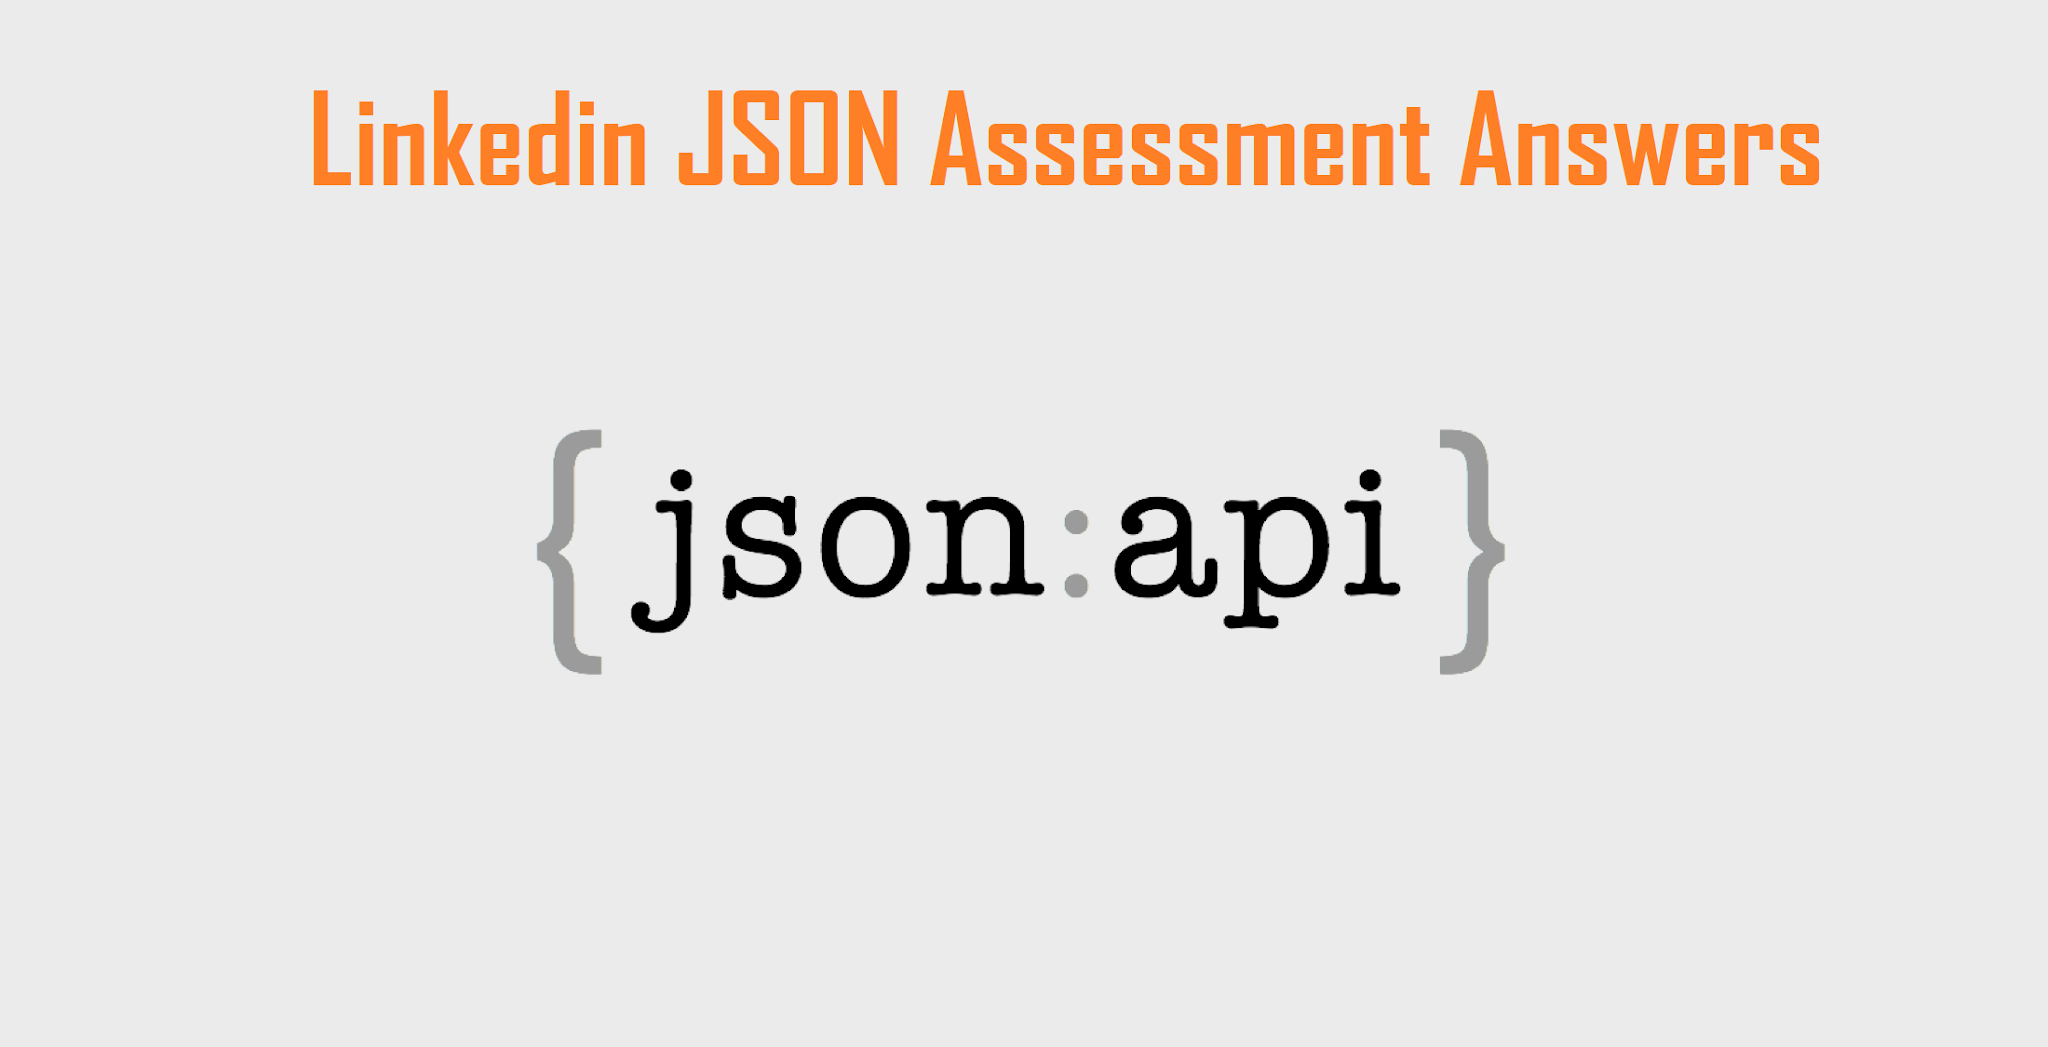 LinkedIn JSON Assessment Answers